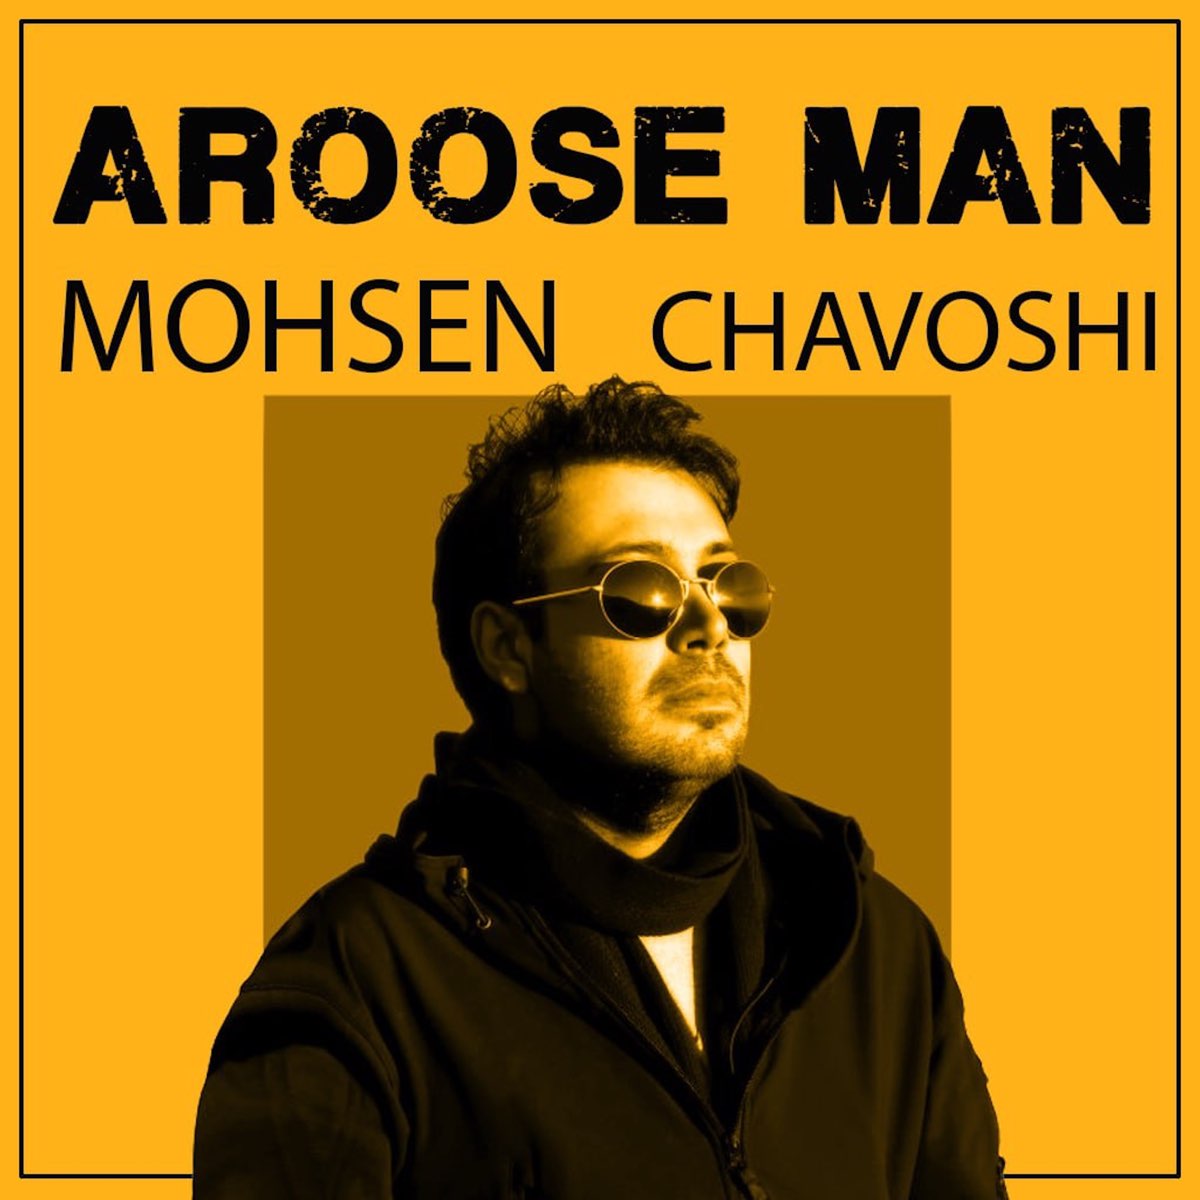 Aroose Man - Single - Album by Mohsen Chavoshi - Apple Music